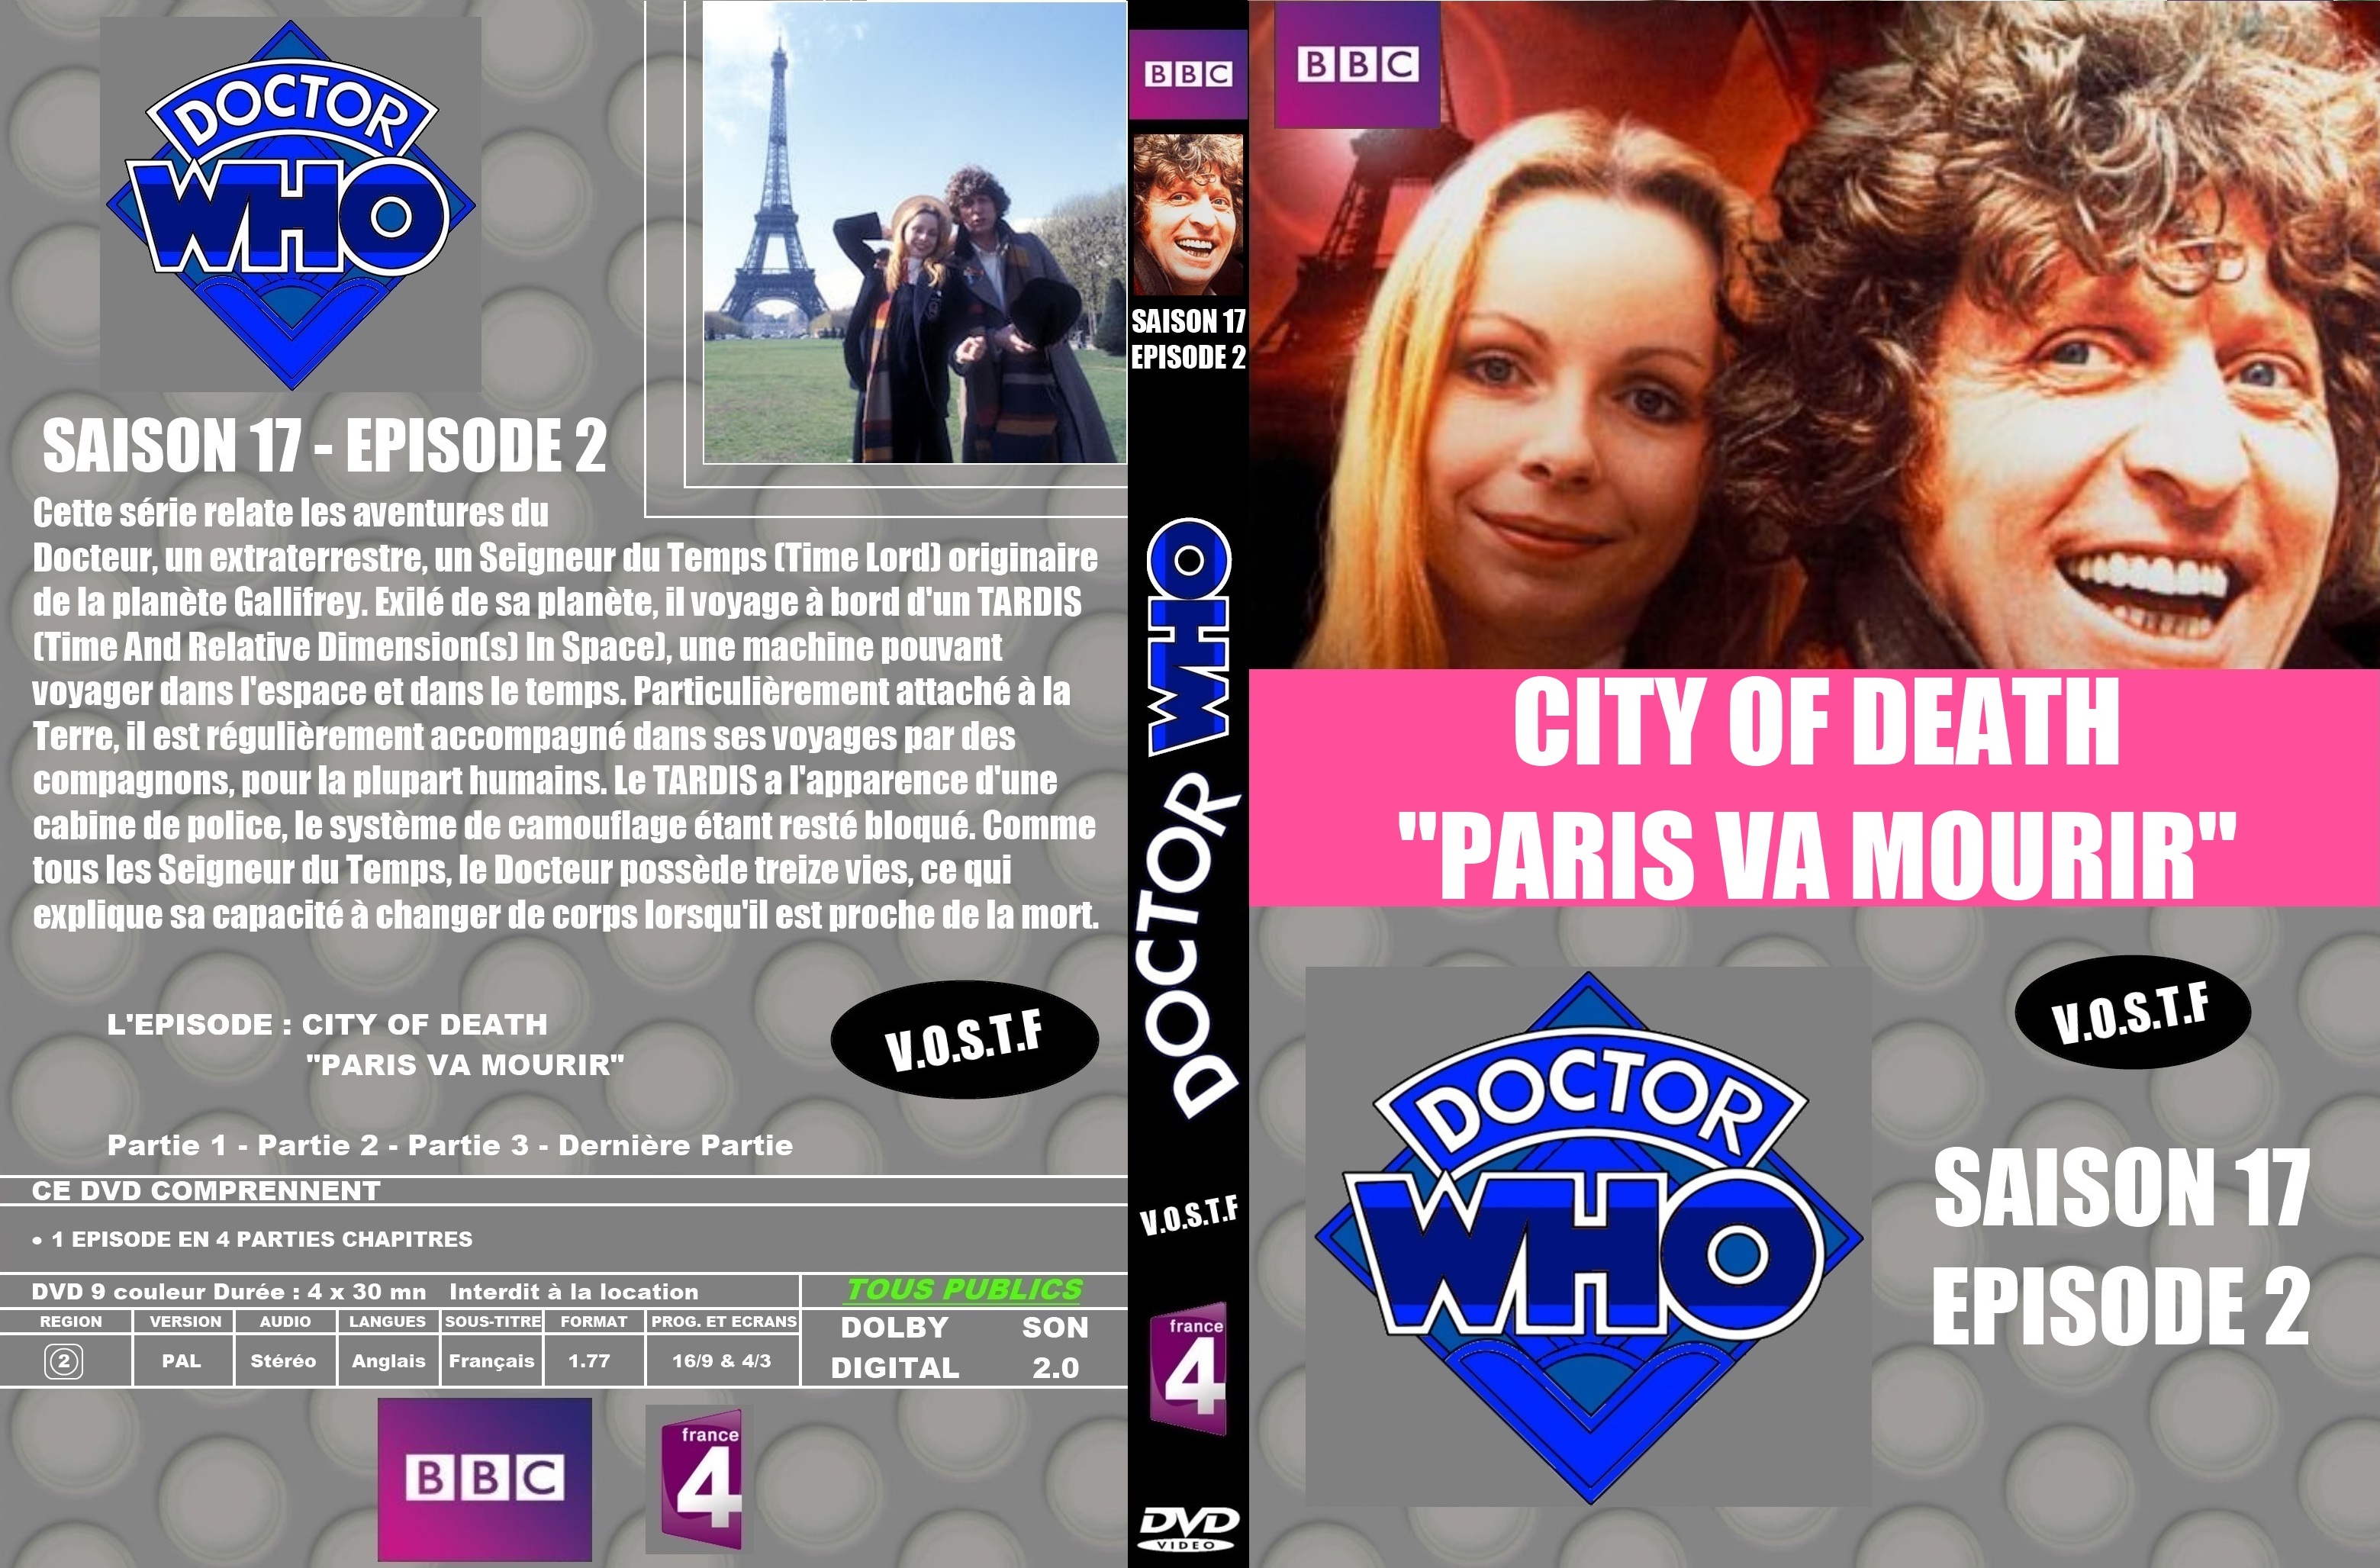 Jaquette DVD Doctor Who Classic Saison 17 pisode 2 custom